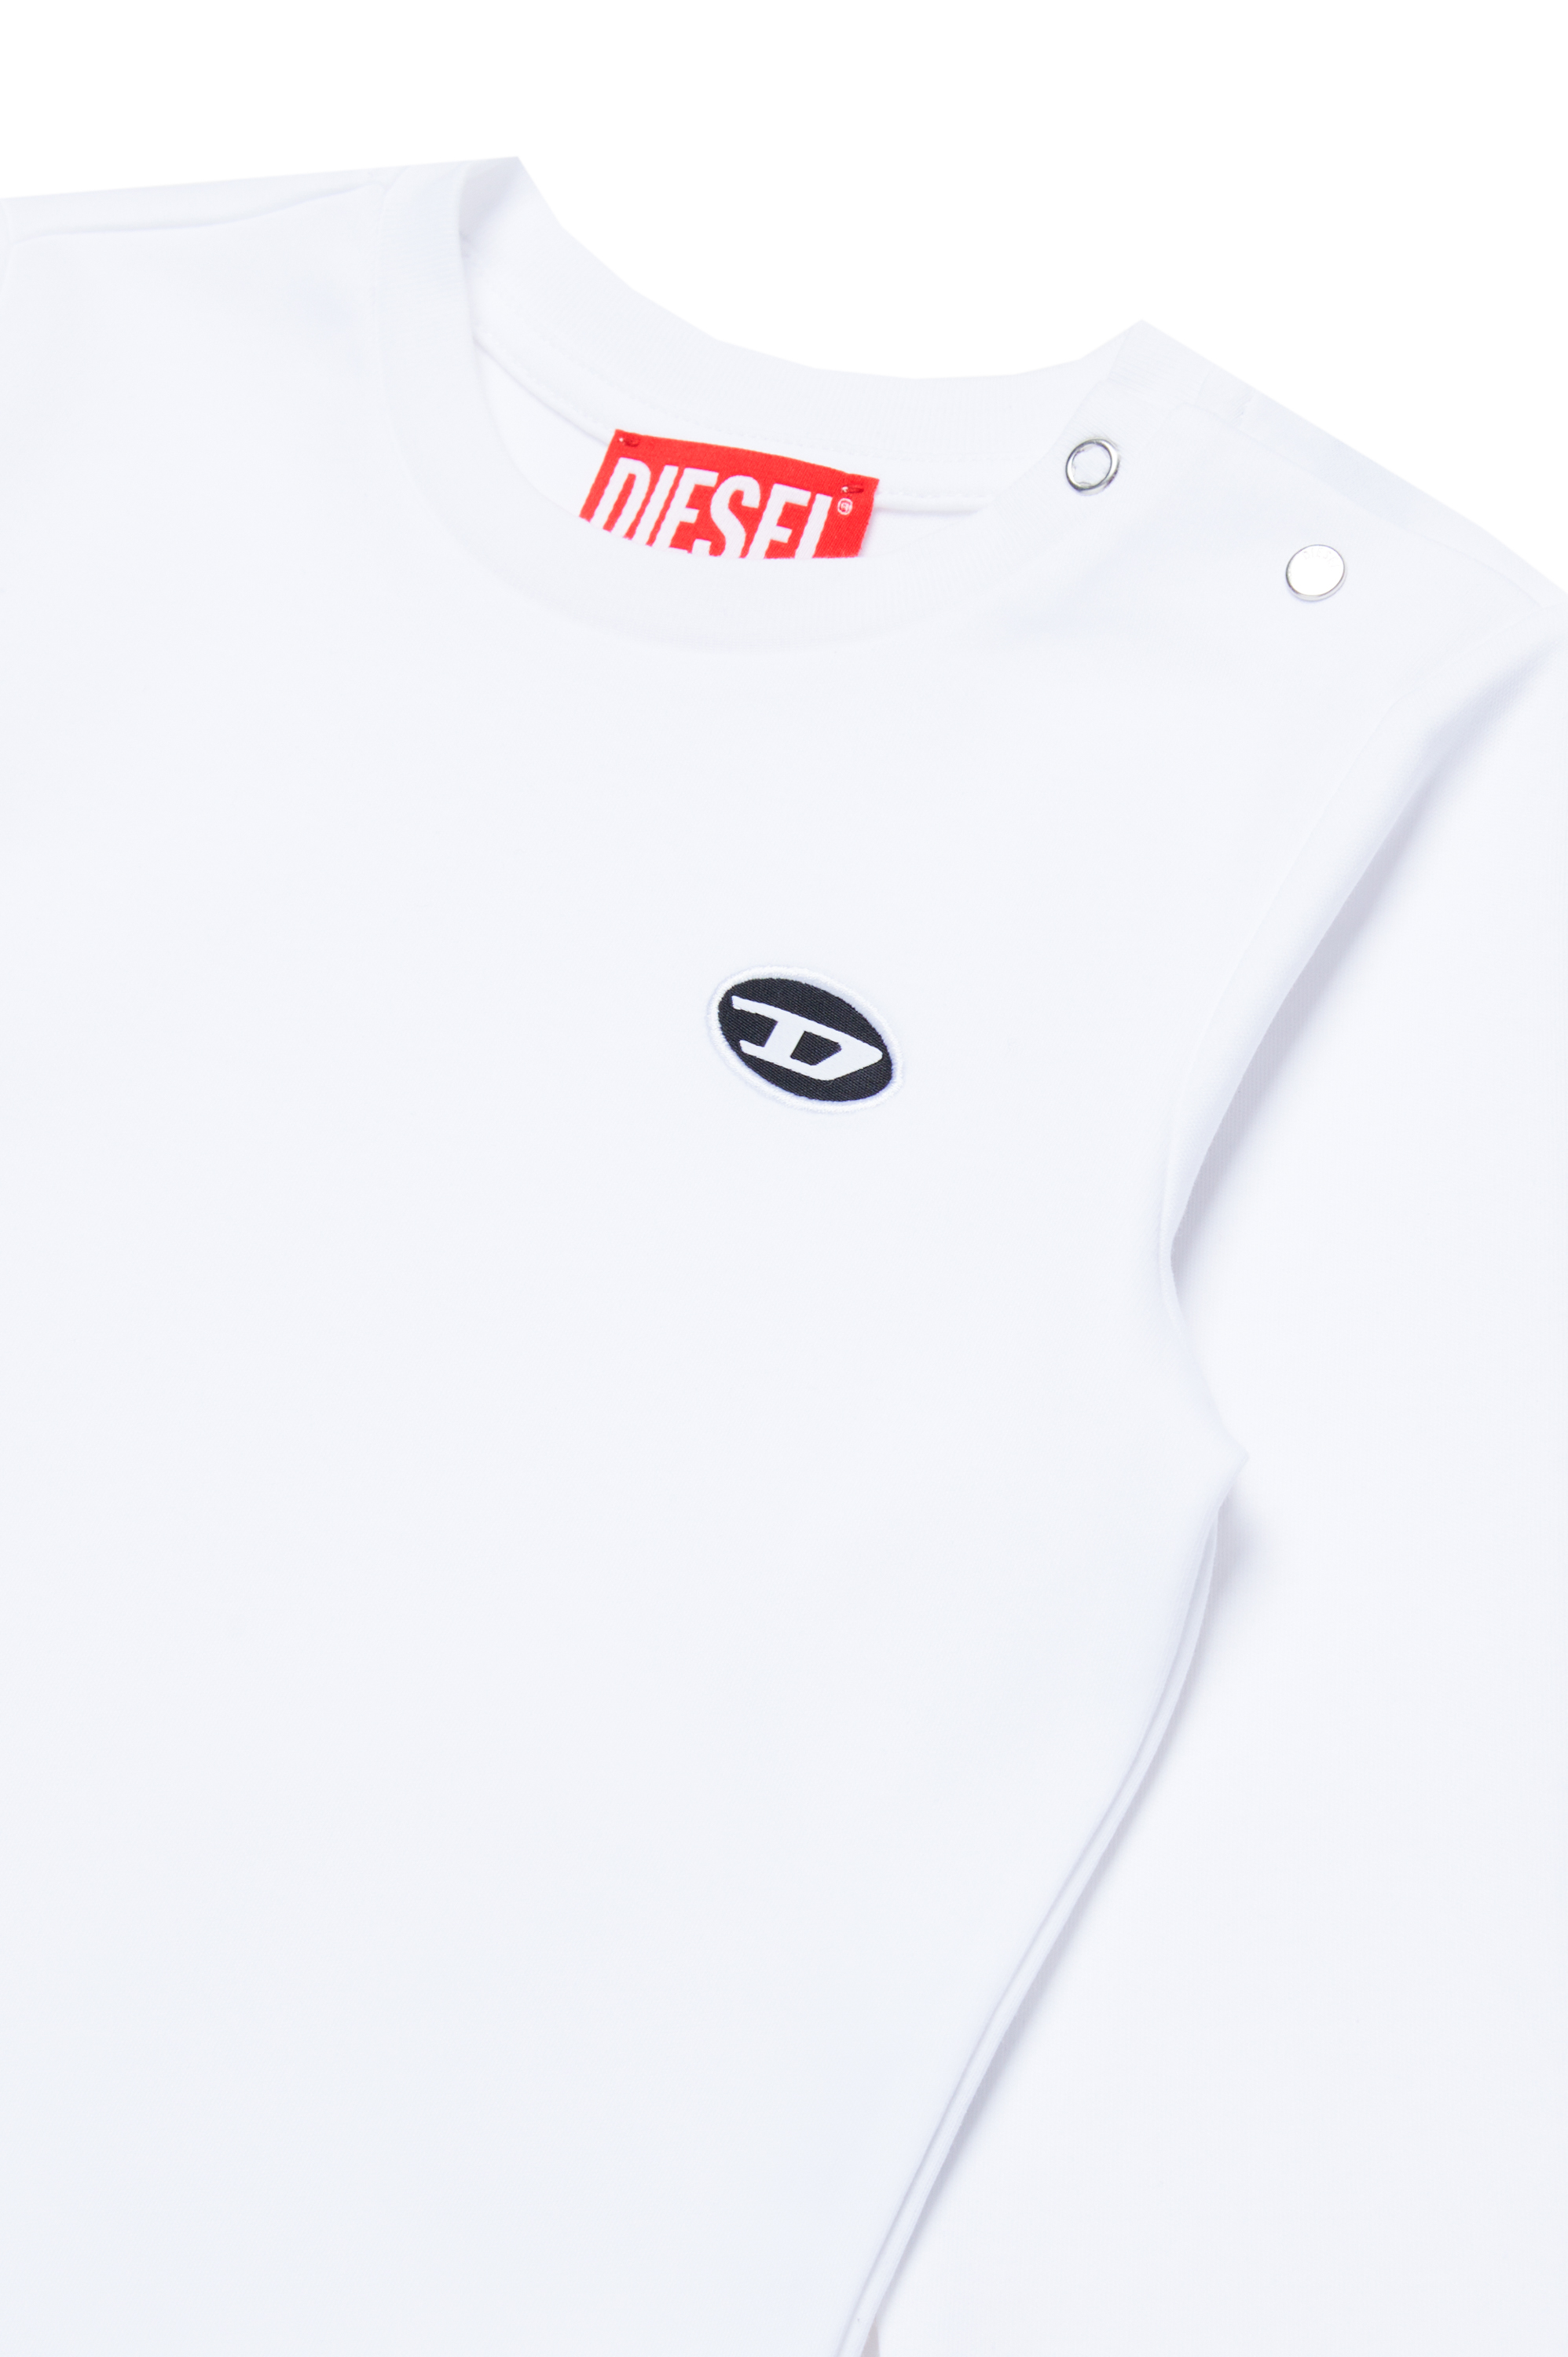 Diesel - TJUSTDOVALPJLSB, Male Long-sleeve T-shirt in organic cotton in ホワイト - Image 3